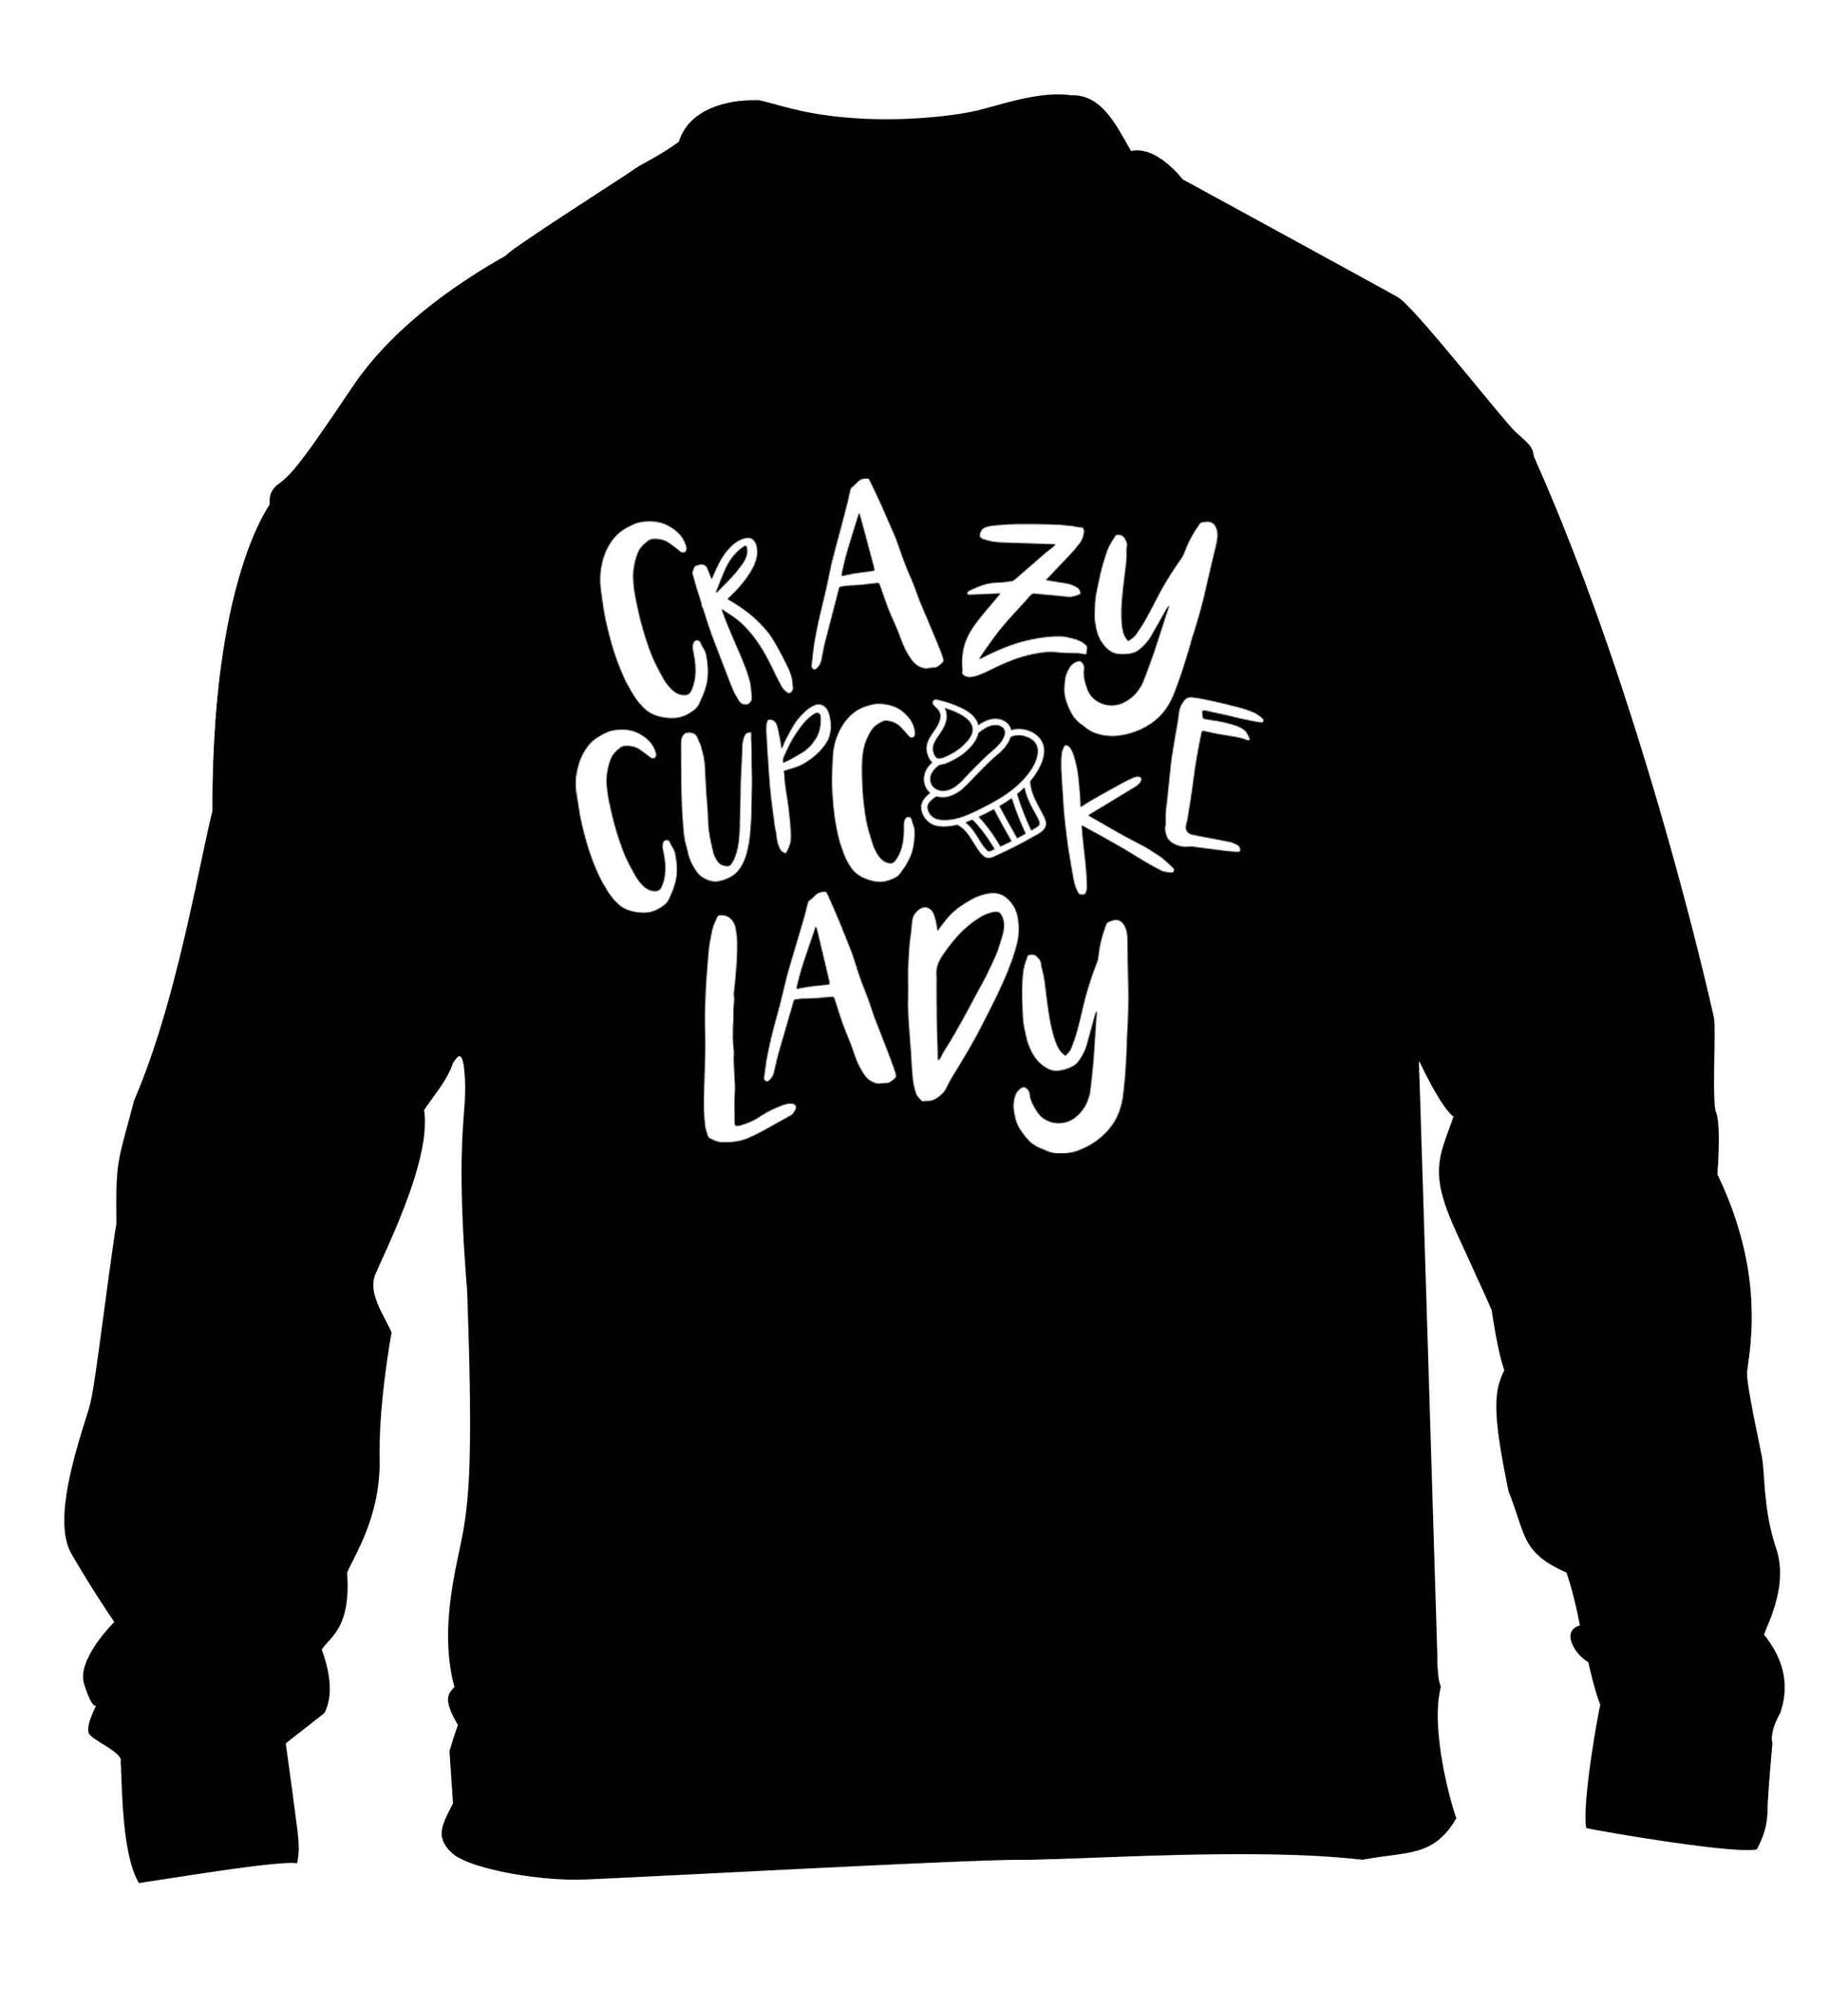 Crazy cupcake lady children's black sweater 12-13 Years